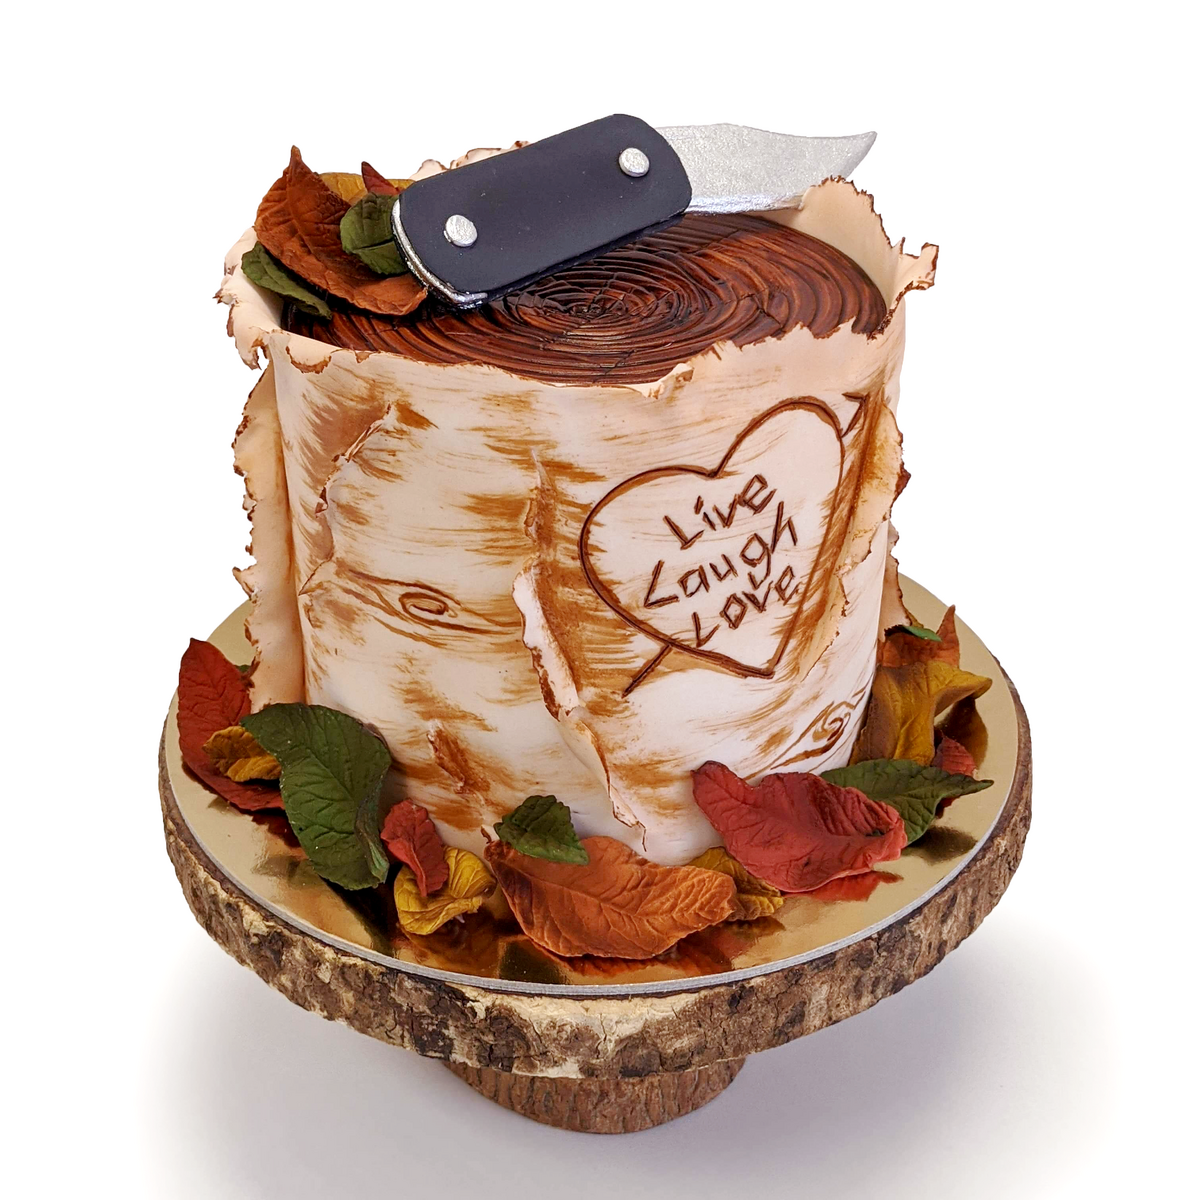 Whippt Kitchen - wood bark cake Live Laugh Love 2